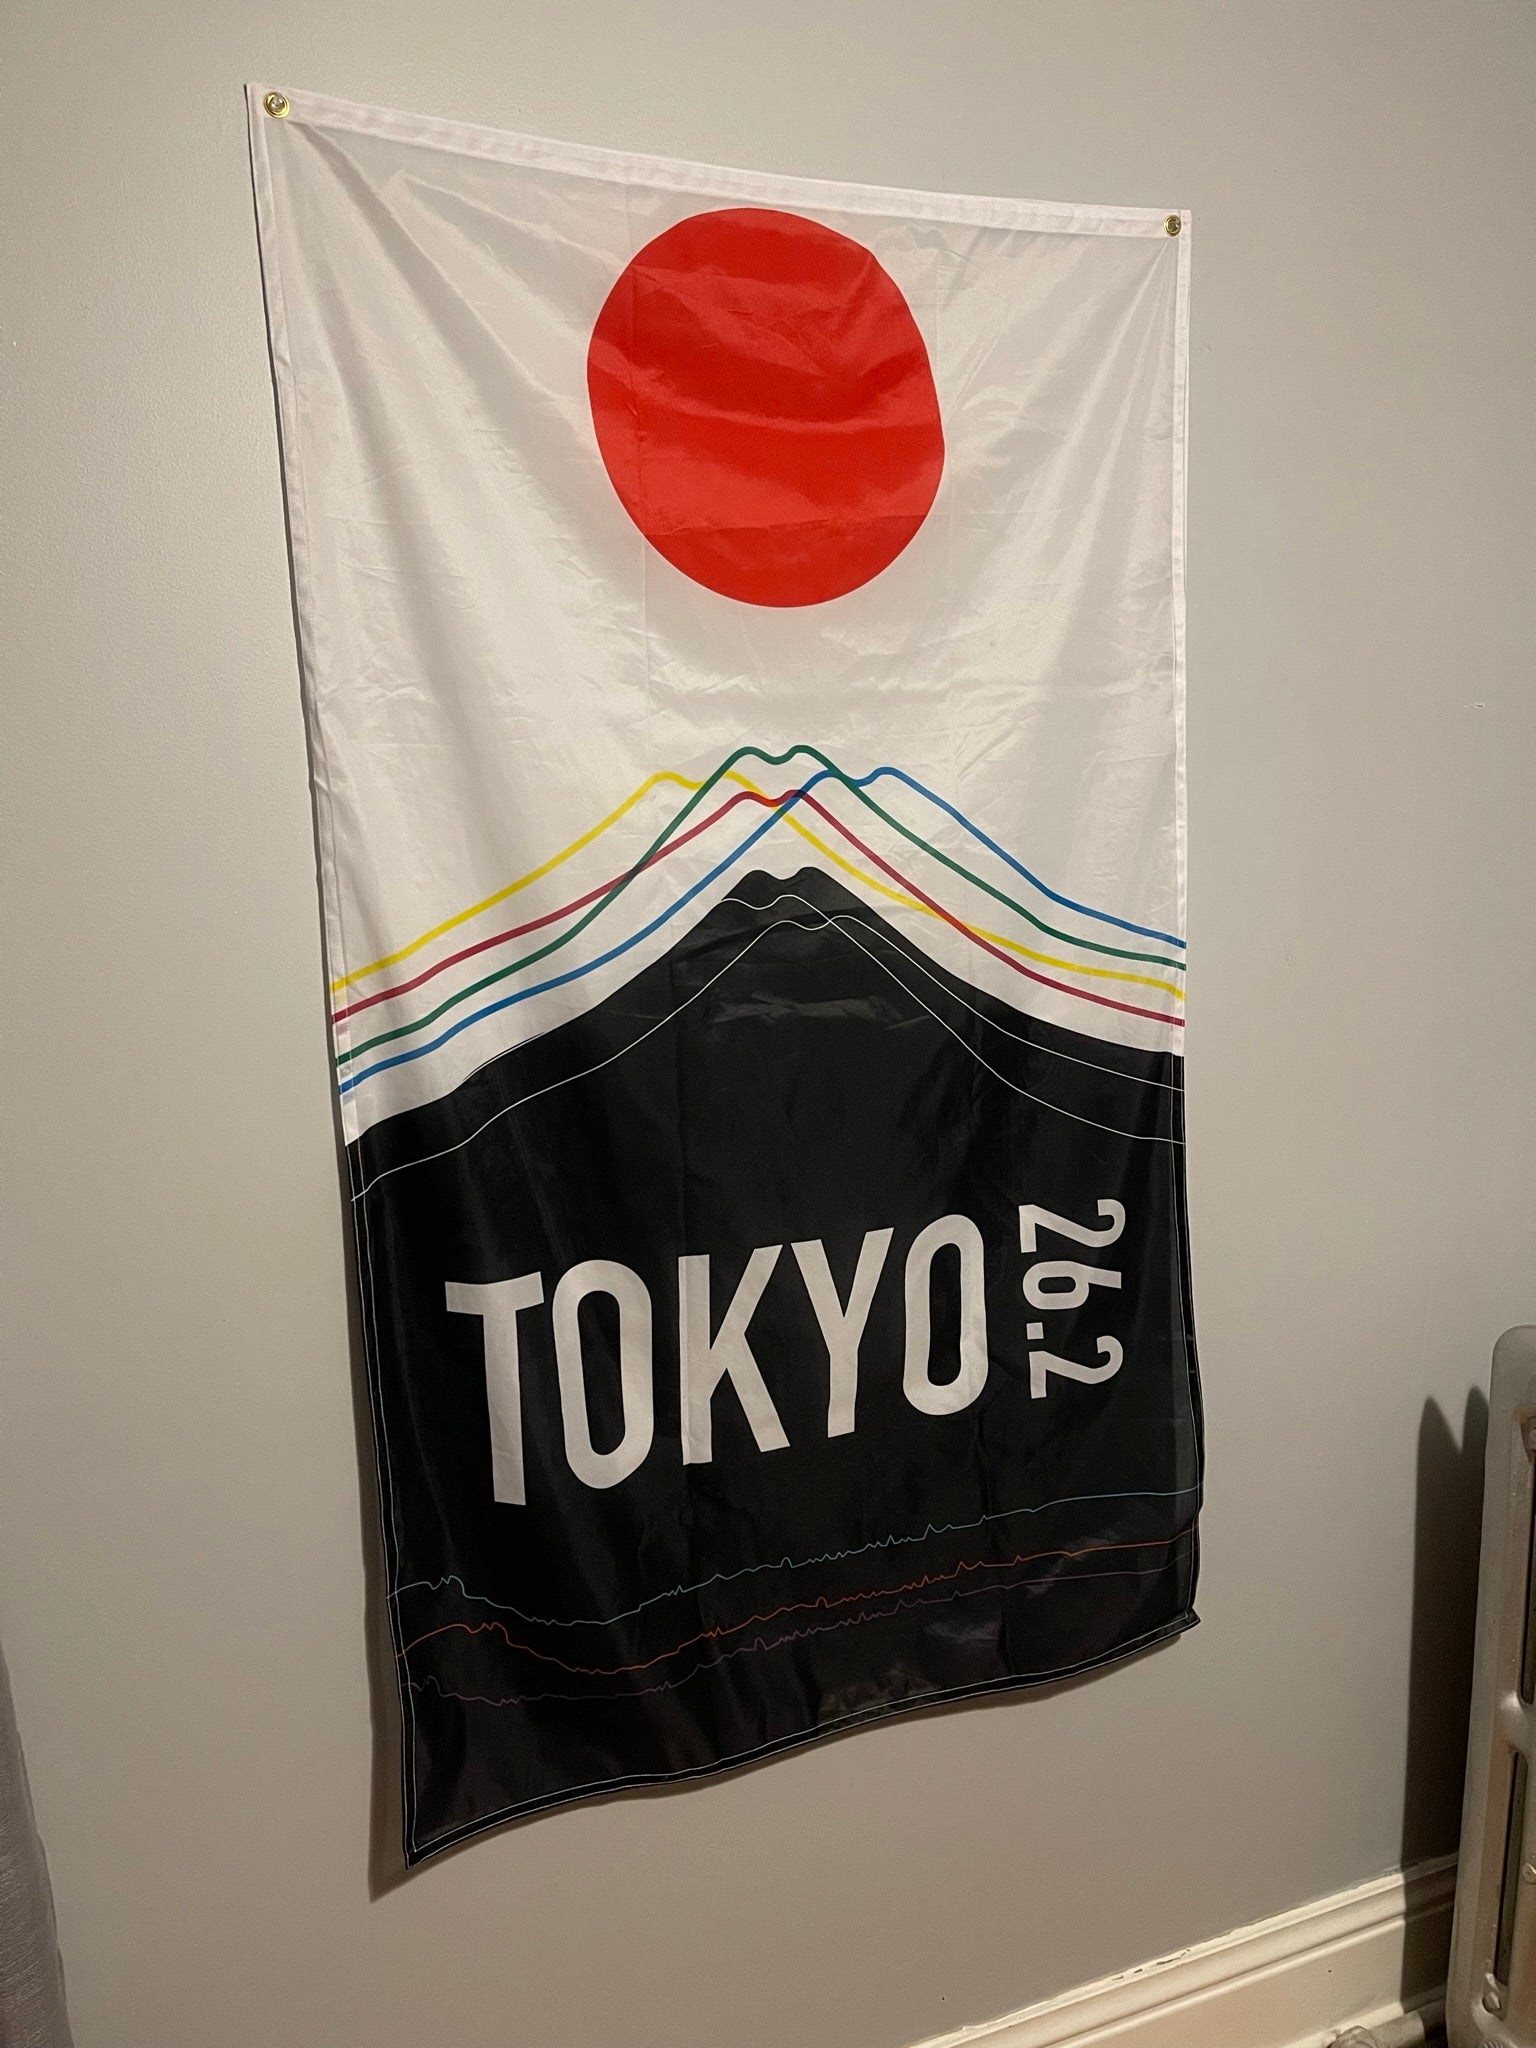 Tokyo 26.2 Race Flag